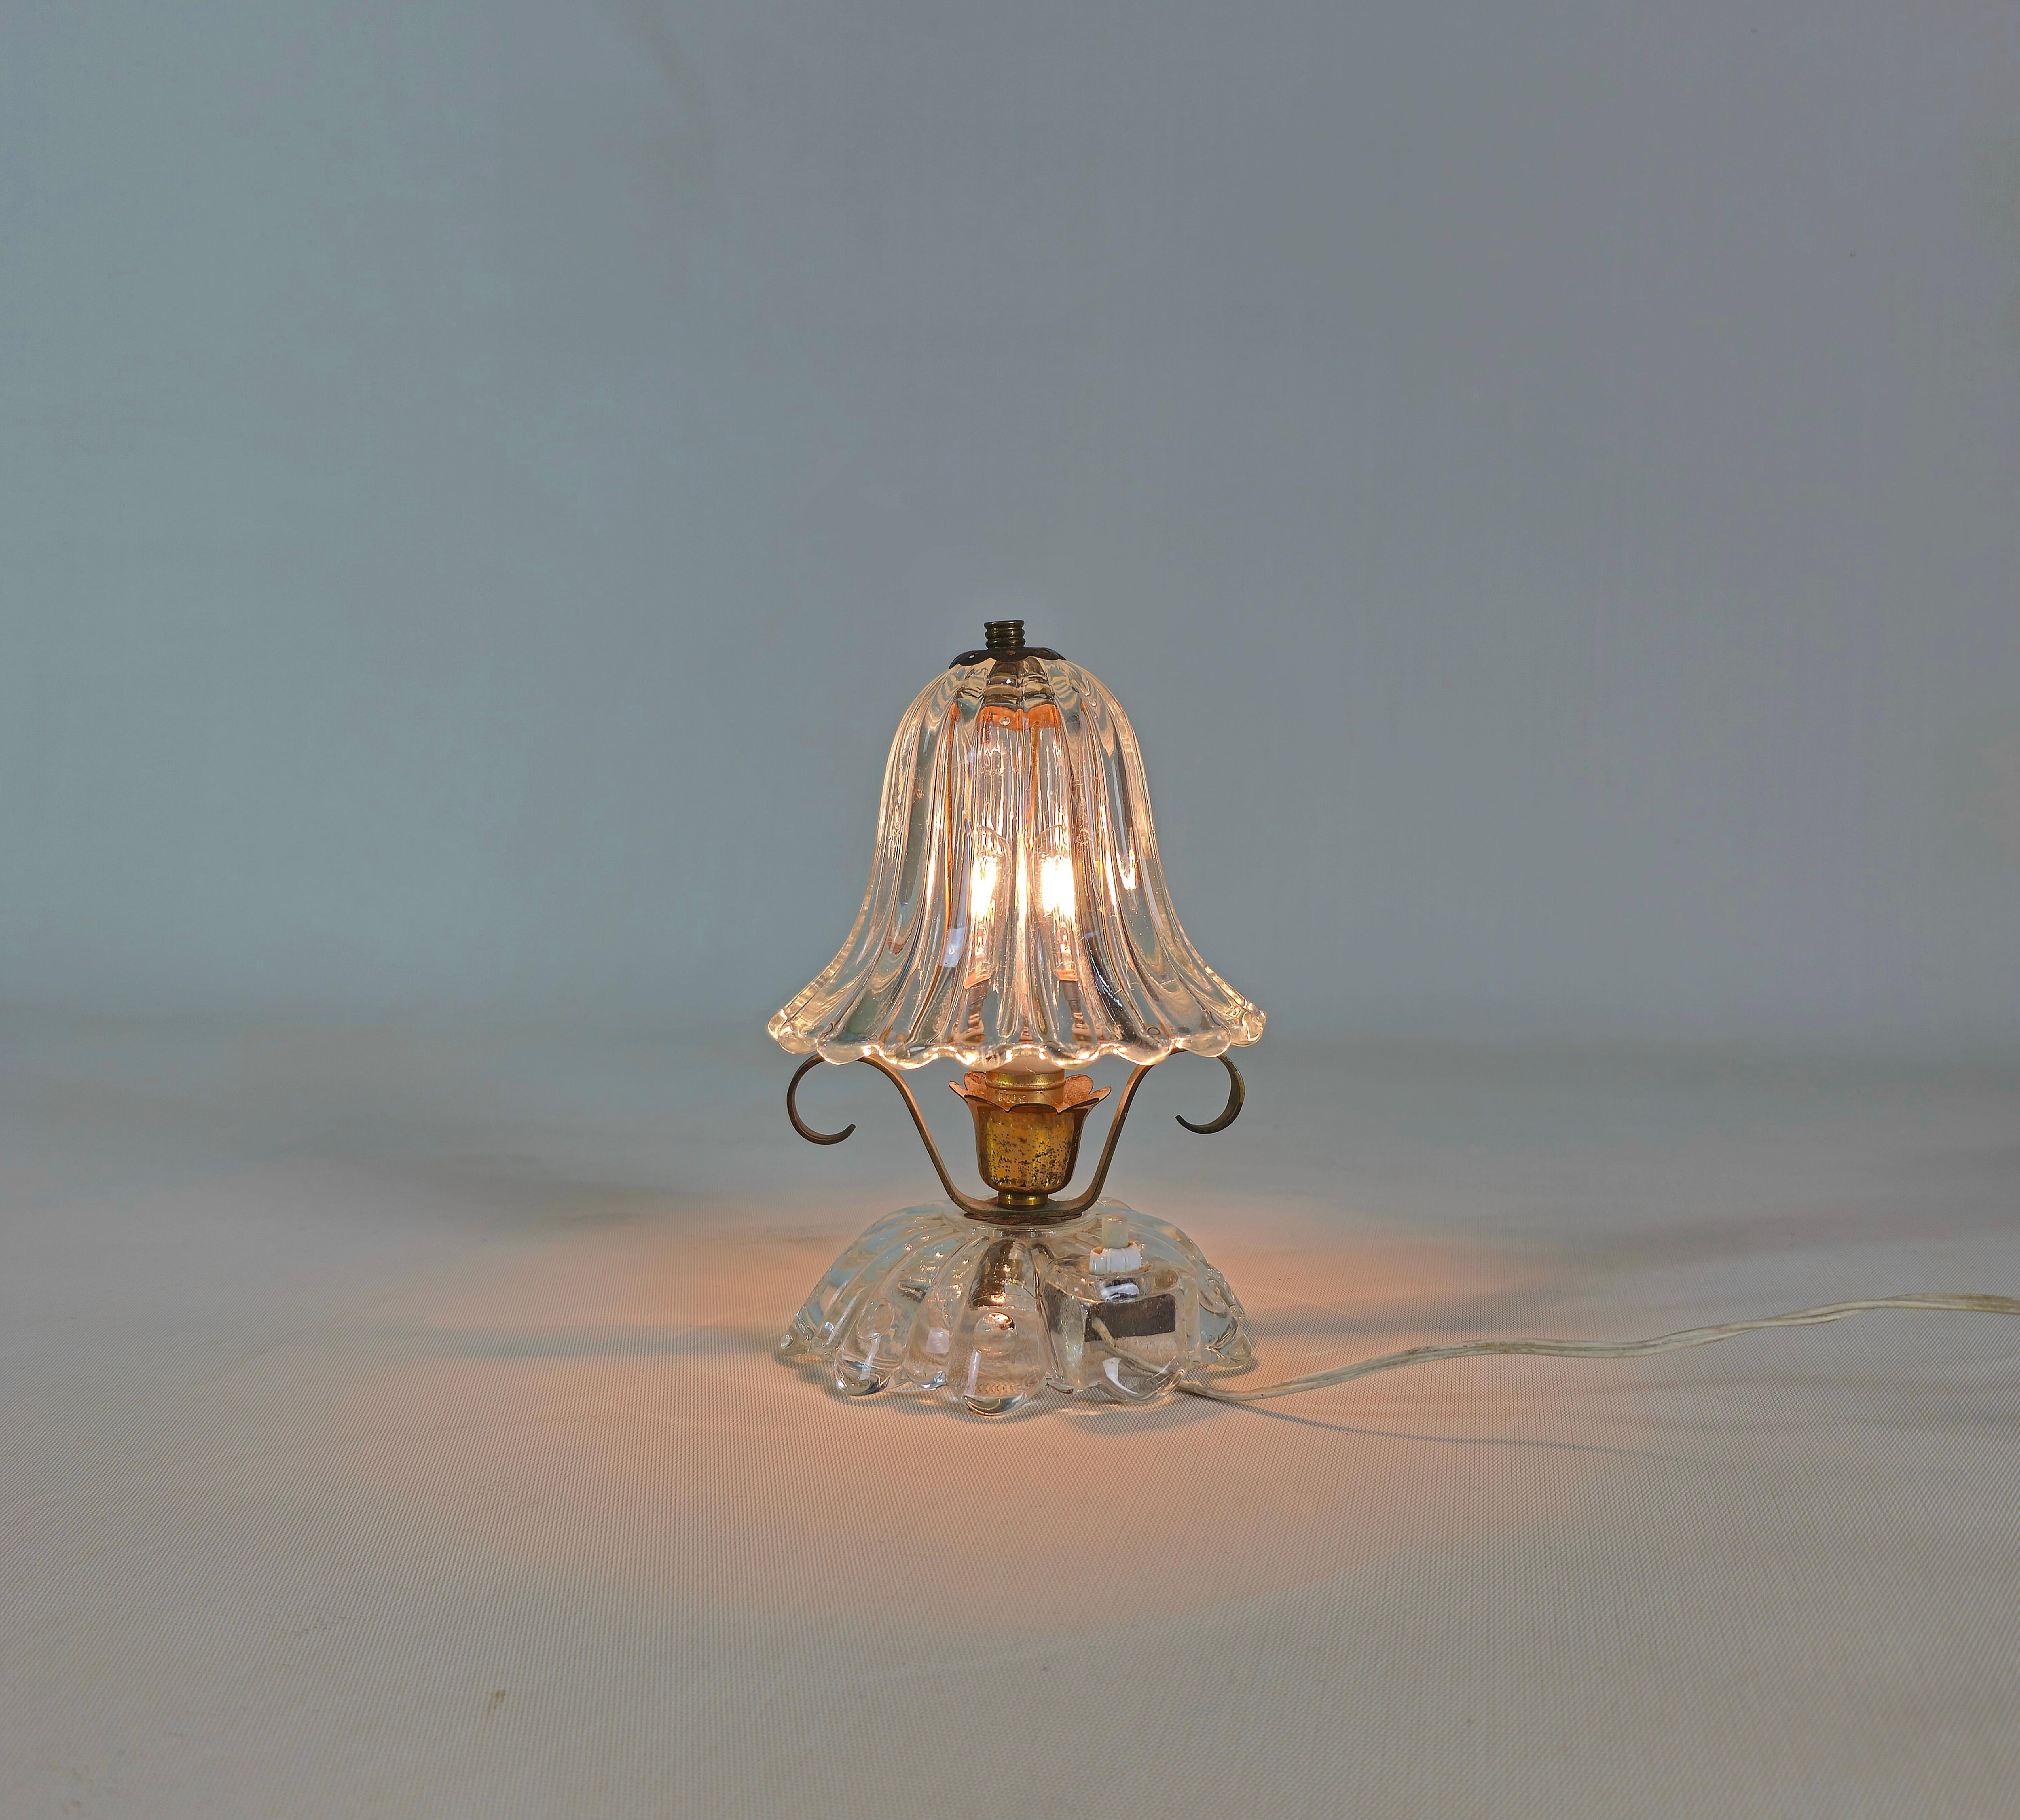  Tischlampe Murano Glas Messing Barovier&Toso Midcentury Italian Design 1940s (20. Jahrhundert)